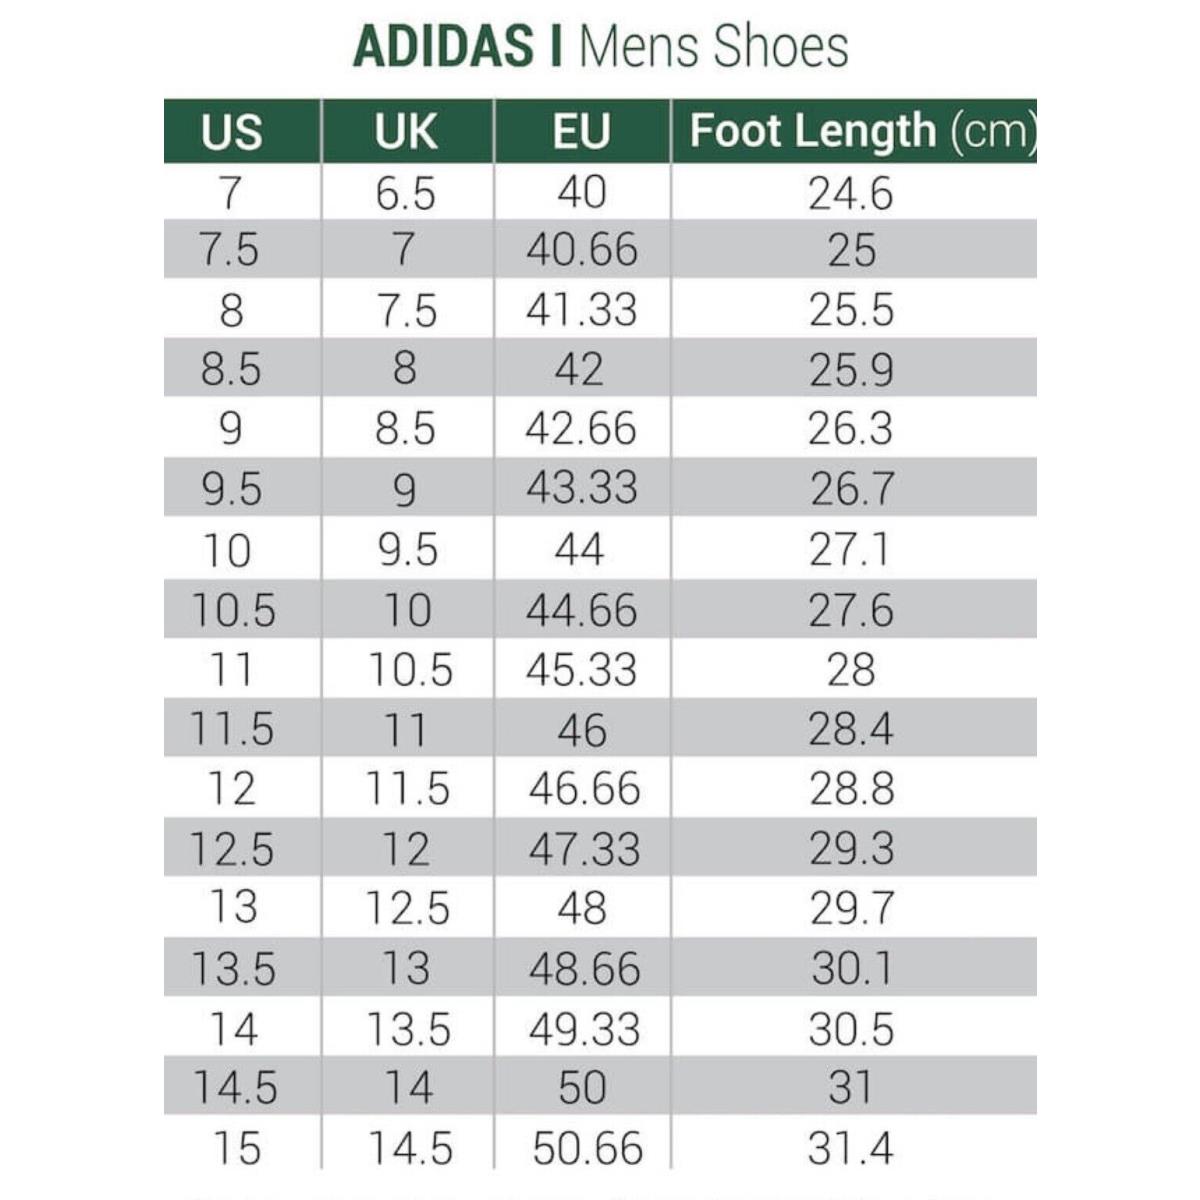 Adidas Terrex Unity Men’s Sneaker Waterproof Hiking Shoe Black Trainer #325